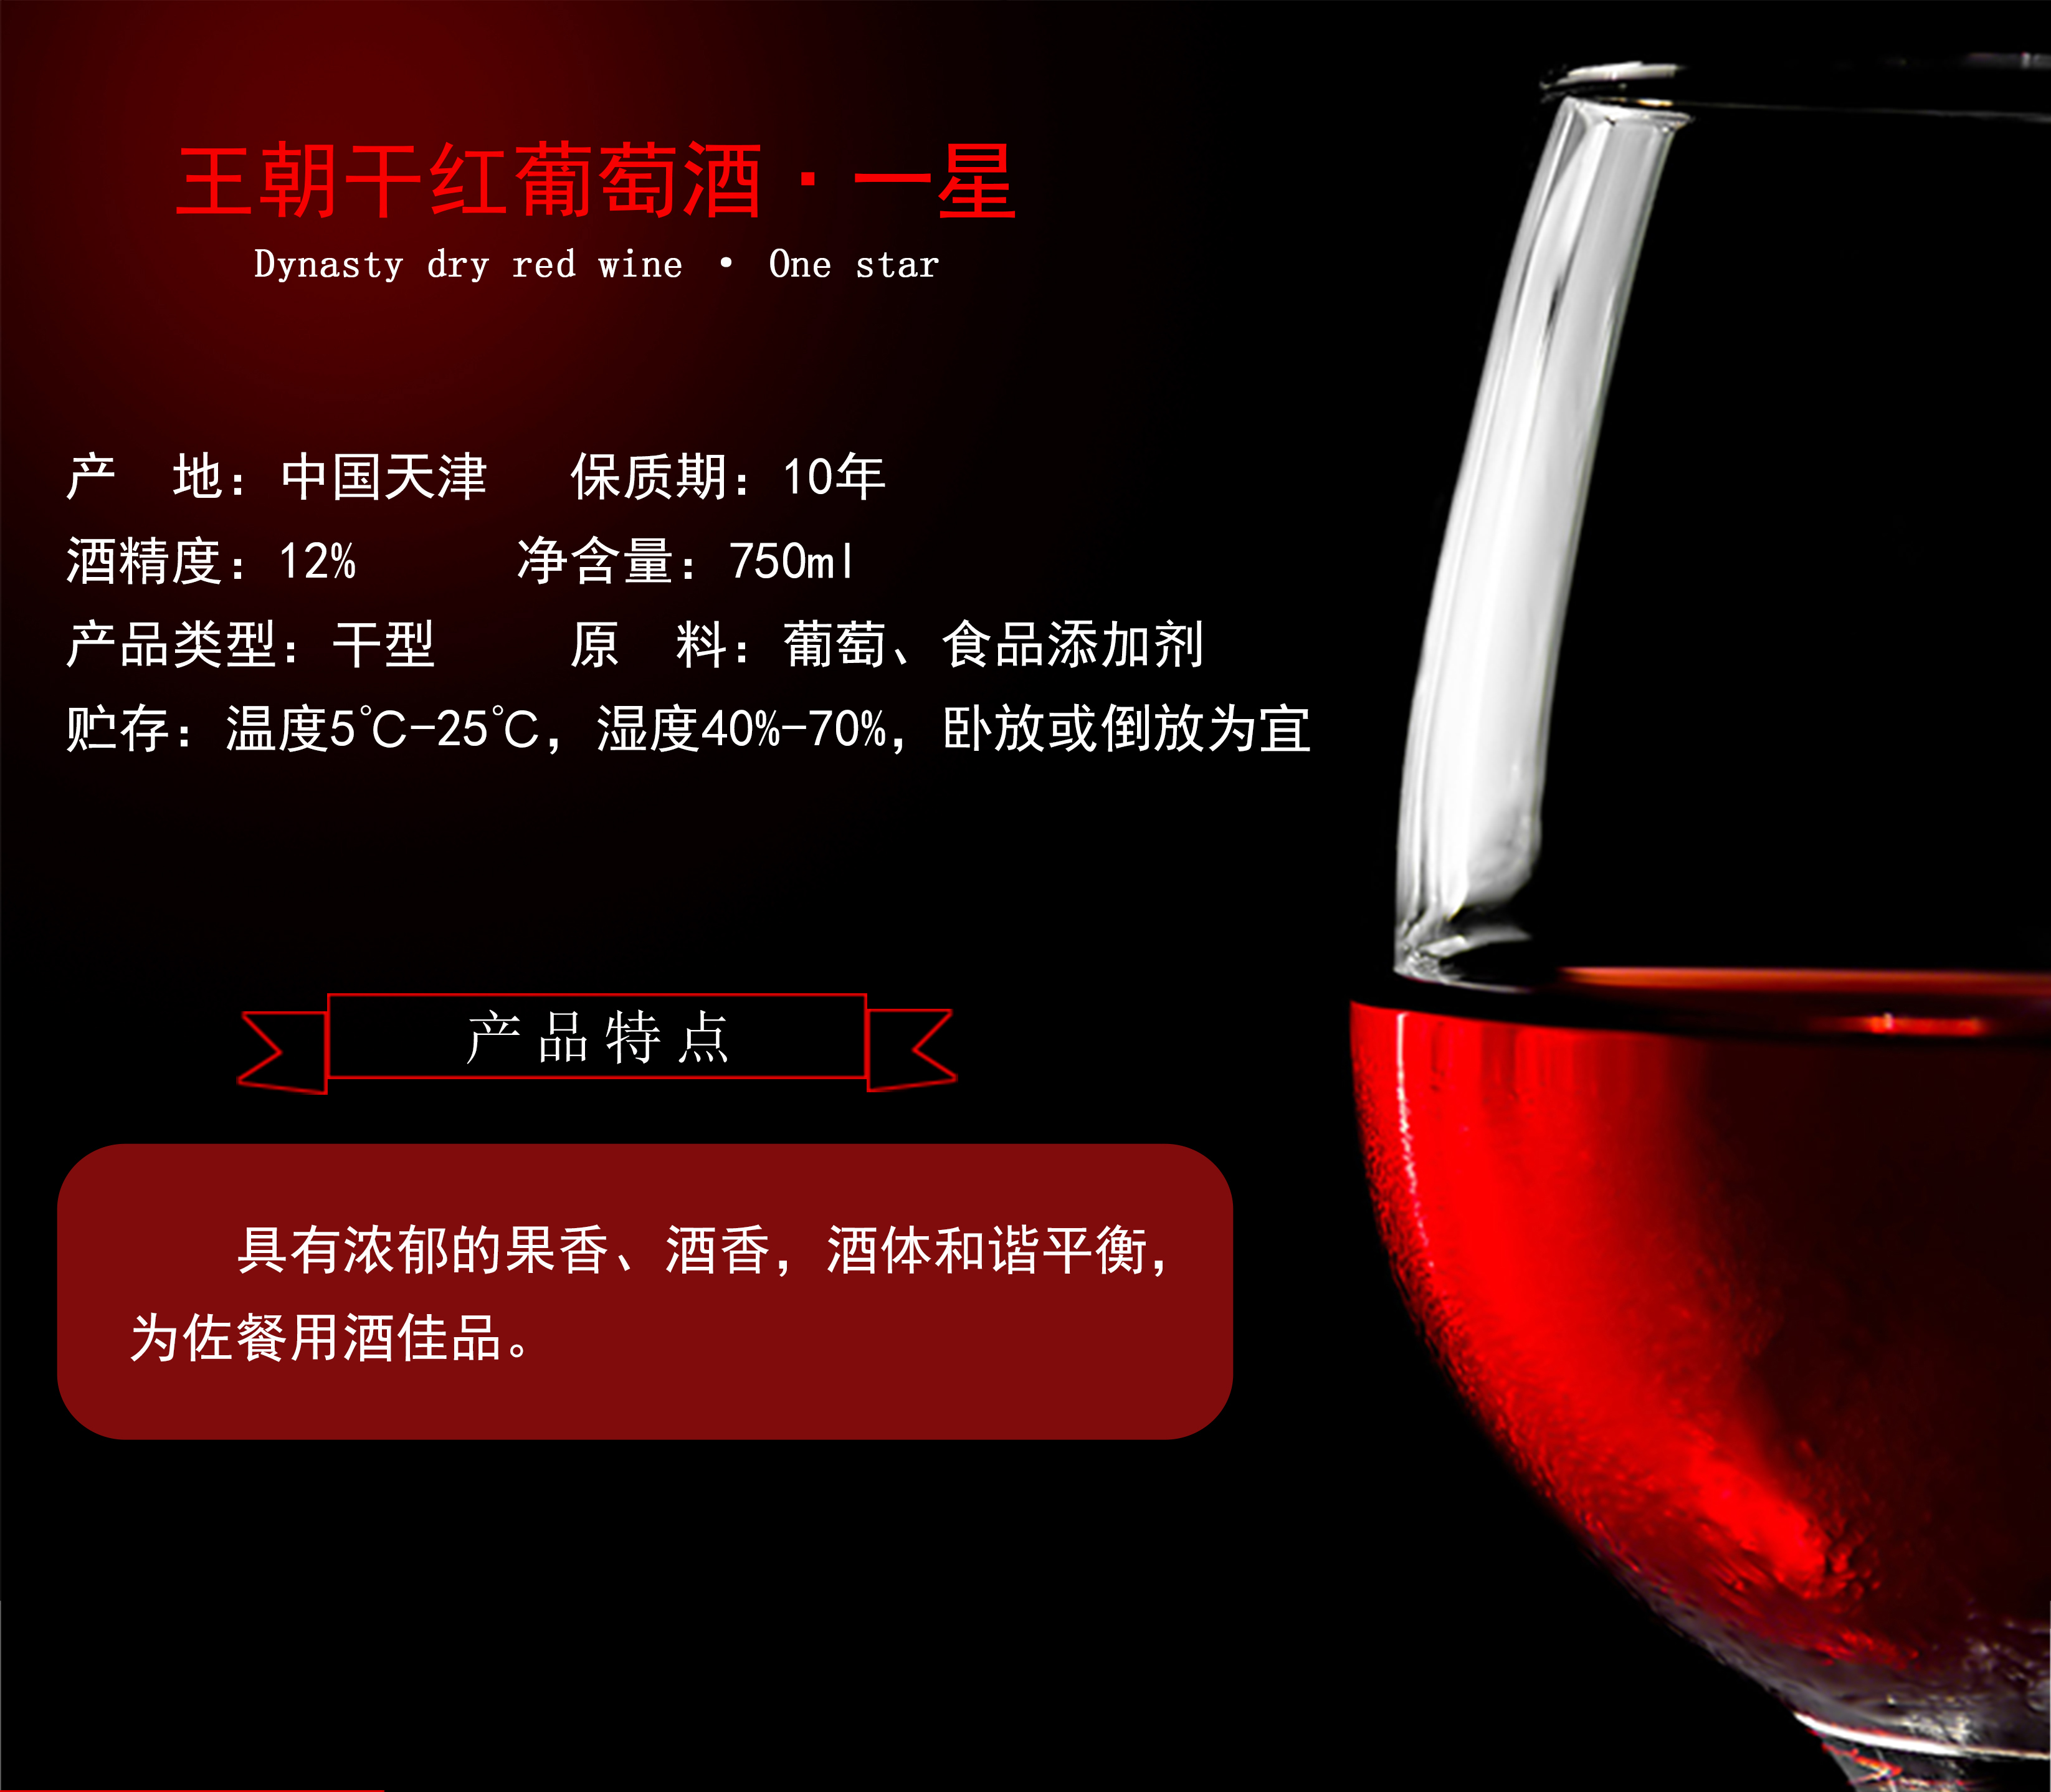 Dynasty王朝一星国产干红葡萄酒(图3)